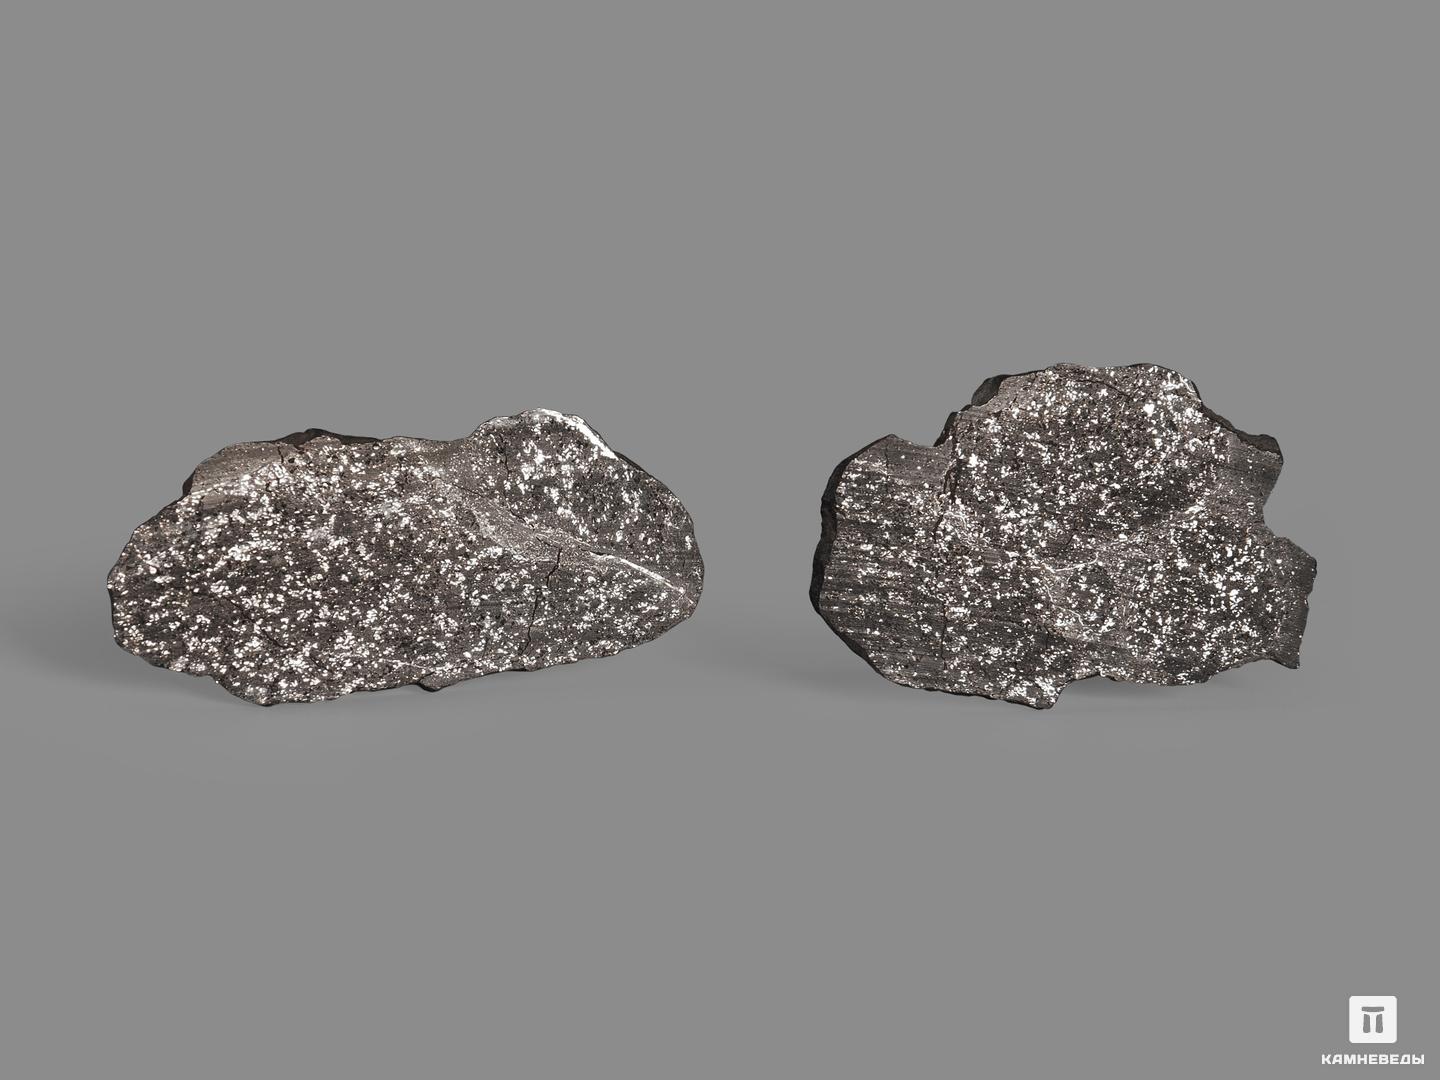 Метеорит Tassédet 004, пластина в боксе 3-4 см (2,4 г), 19803, фото 2